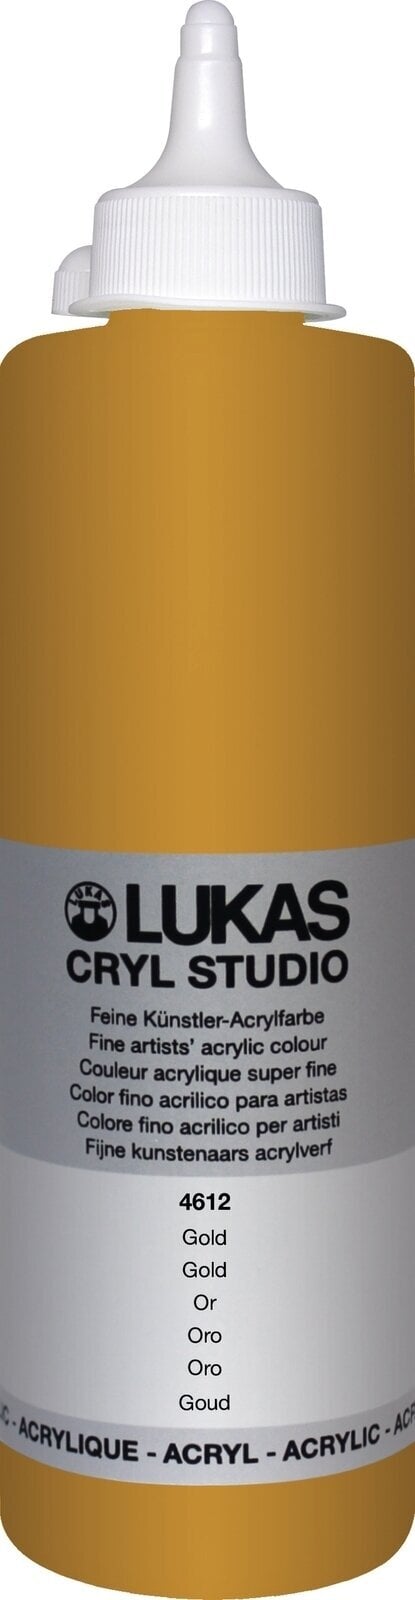 Acrylic Paint Lukas Cryl Studio Acrylic Paint 500 ml Gold